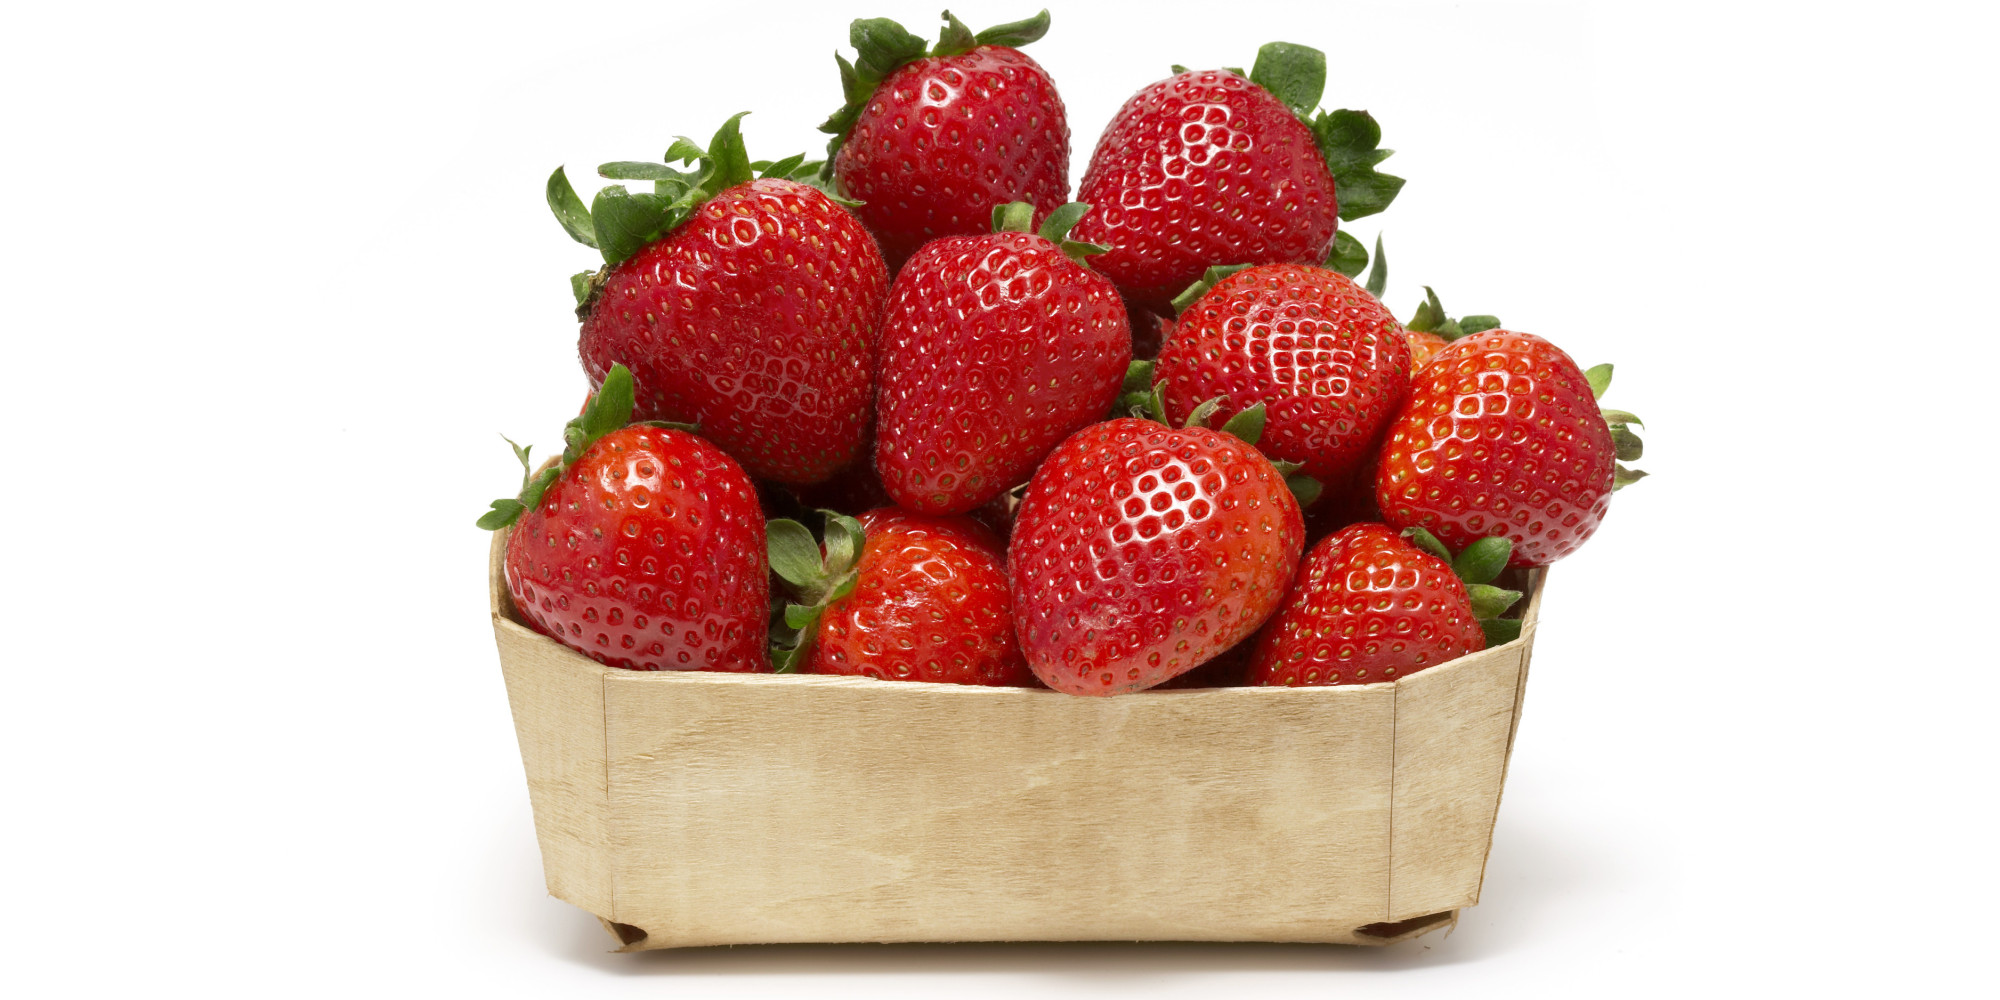 Why You Should Buy Farm Fresh Strawberries | HuffPost